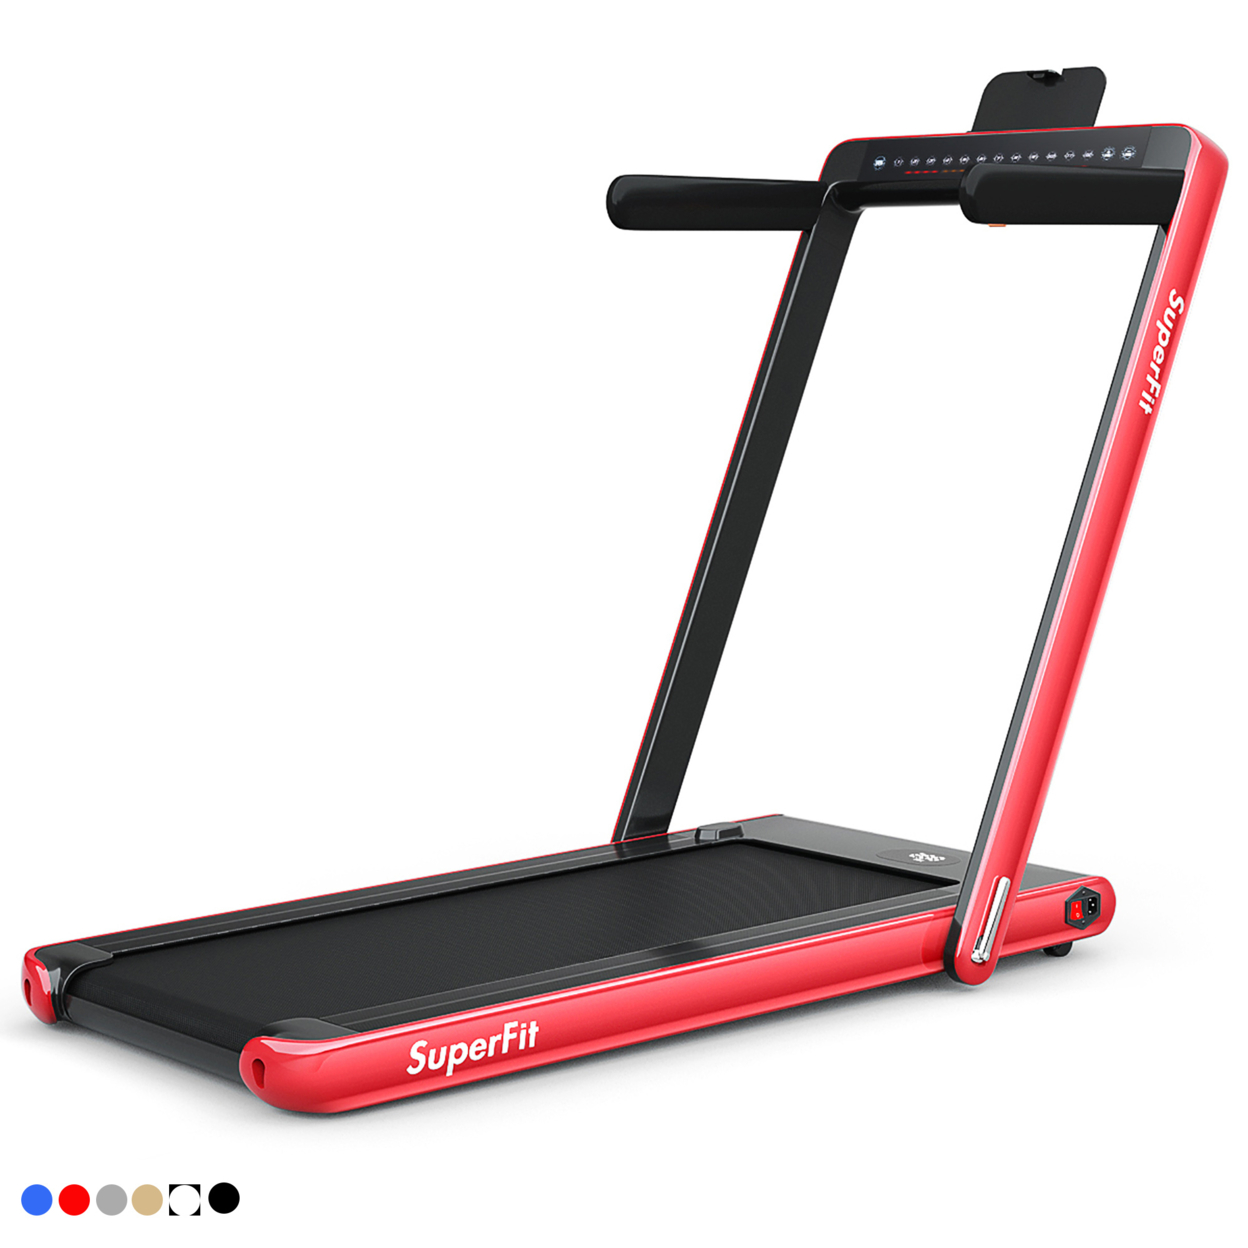 2 In 1 Folding Treadmill 2.25HP Running Machine W/ Dual Display - Black